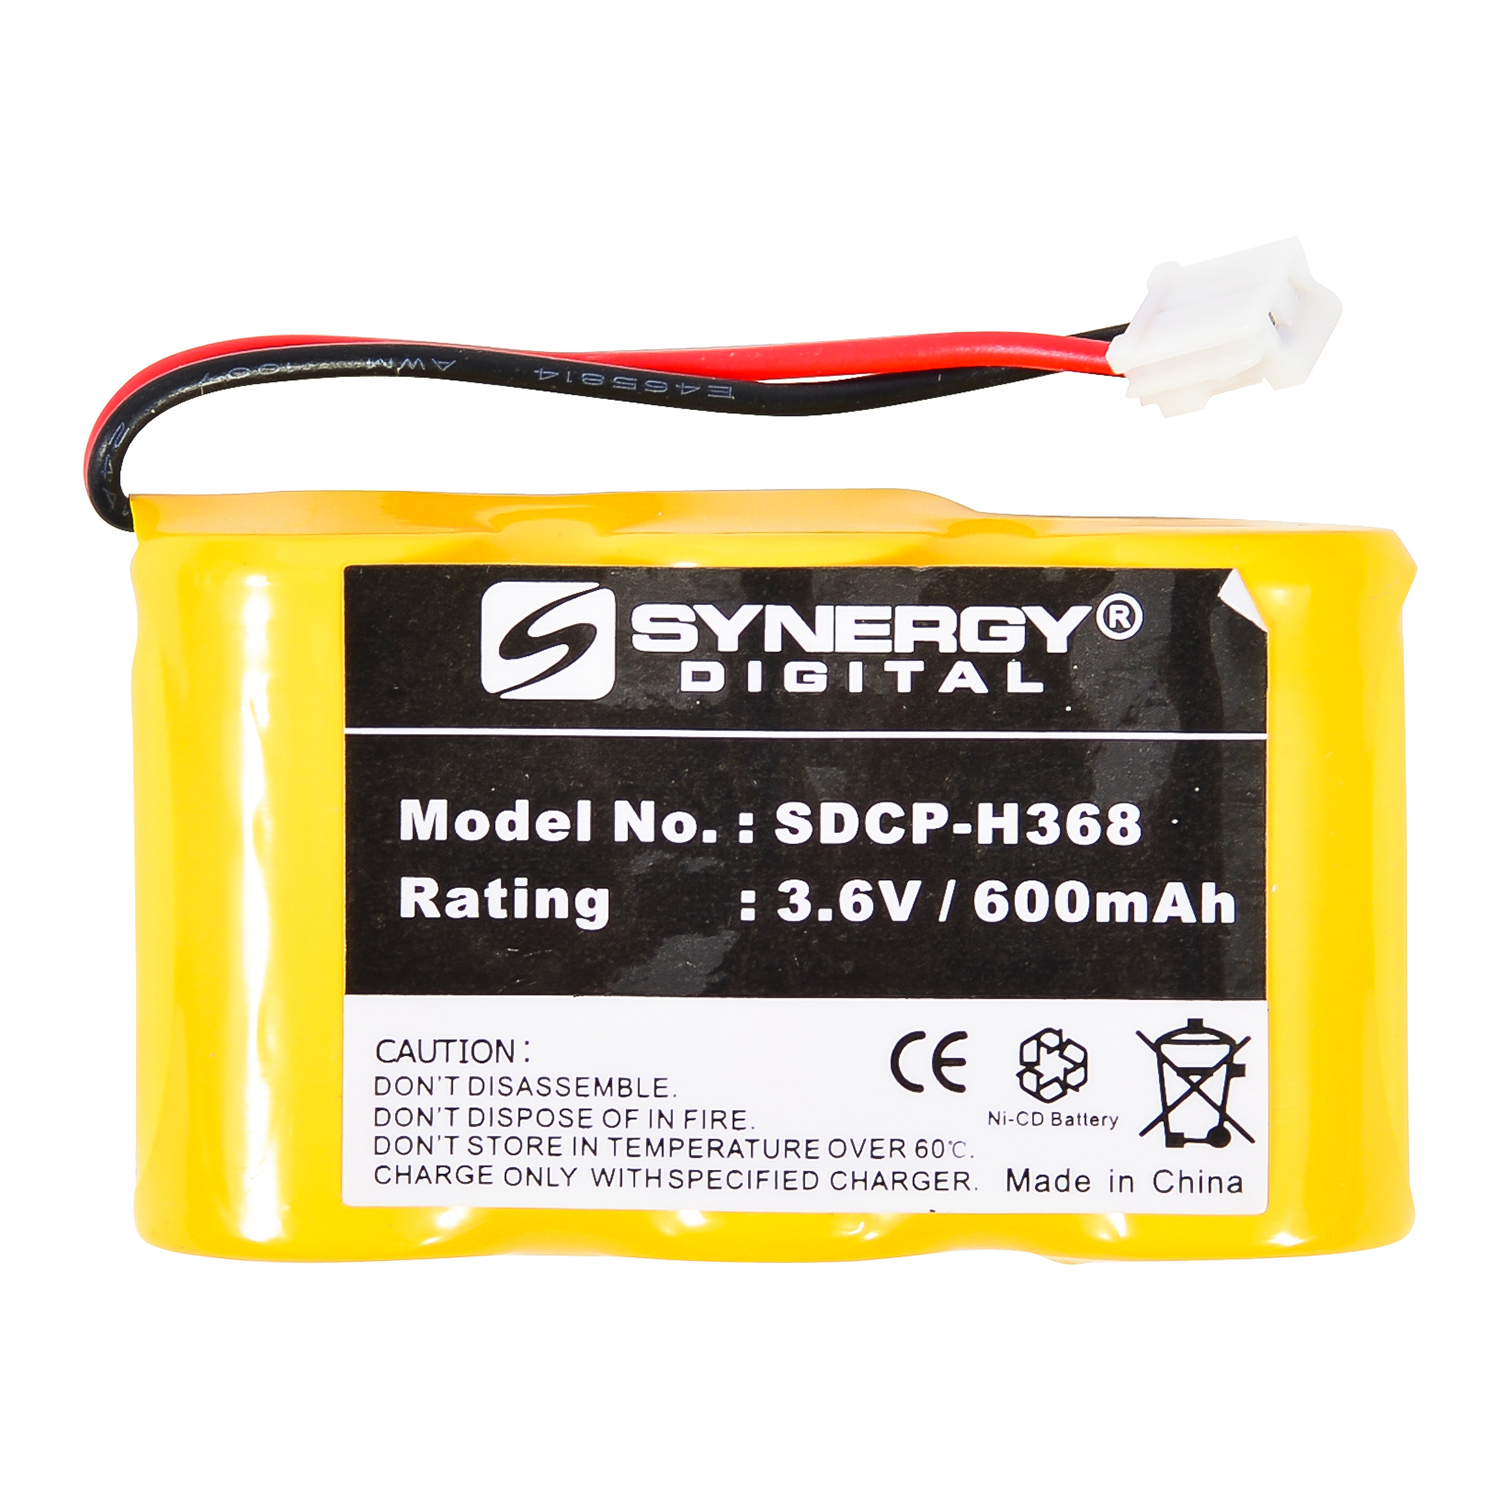 BATT-5922 - Ni-CD, 3.6 Volt, 600 mAh, Ultra Hi-Capacity Battery - Replacement Battery for Rechargeable Cordless Phone Battery